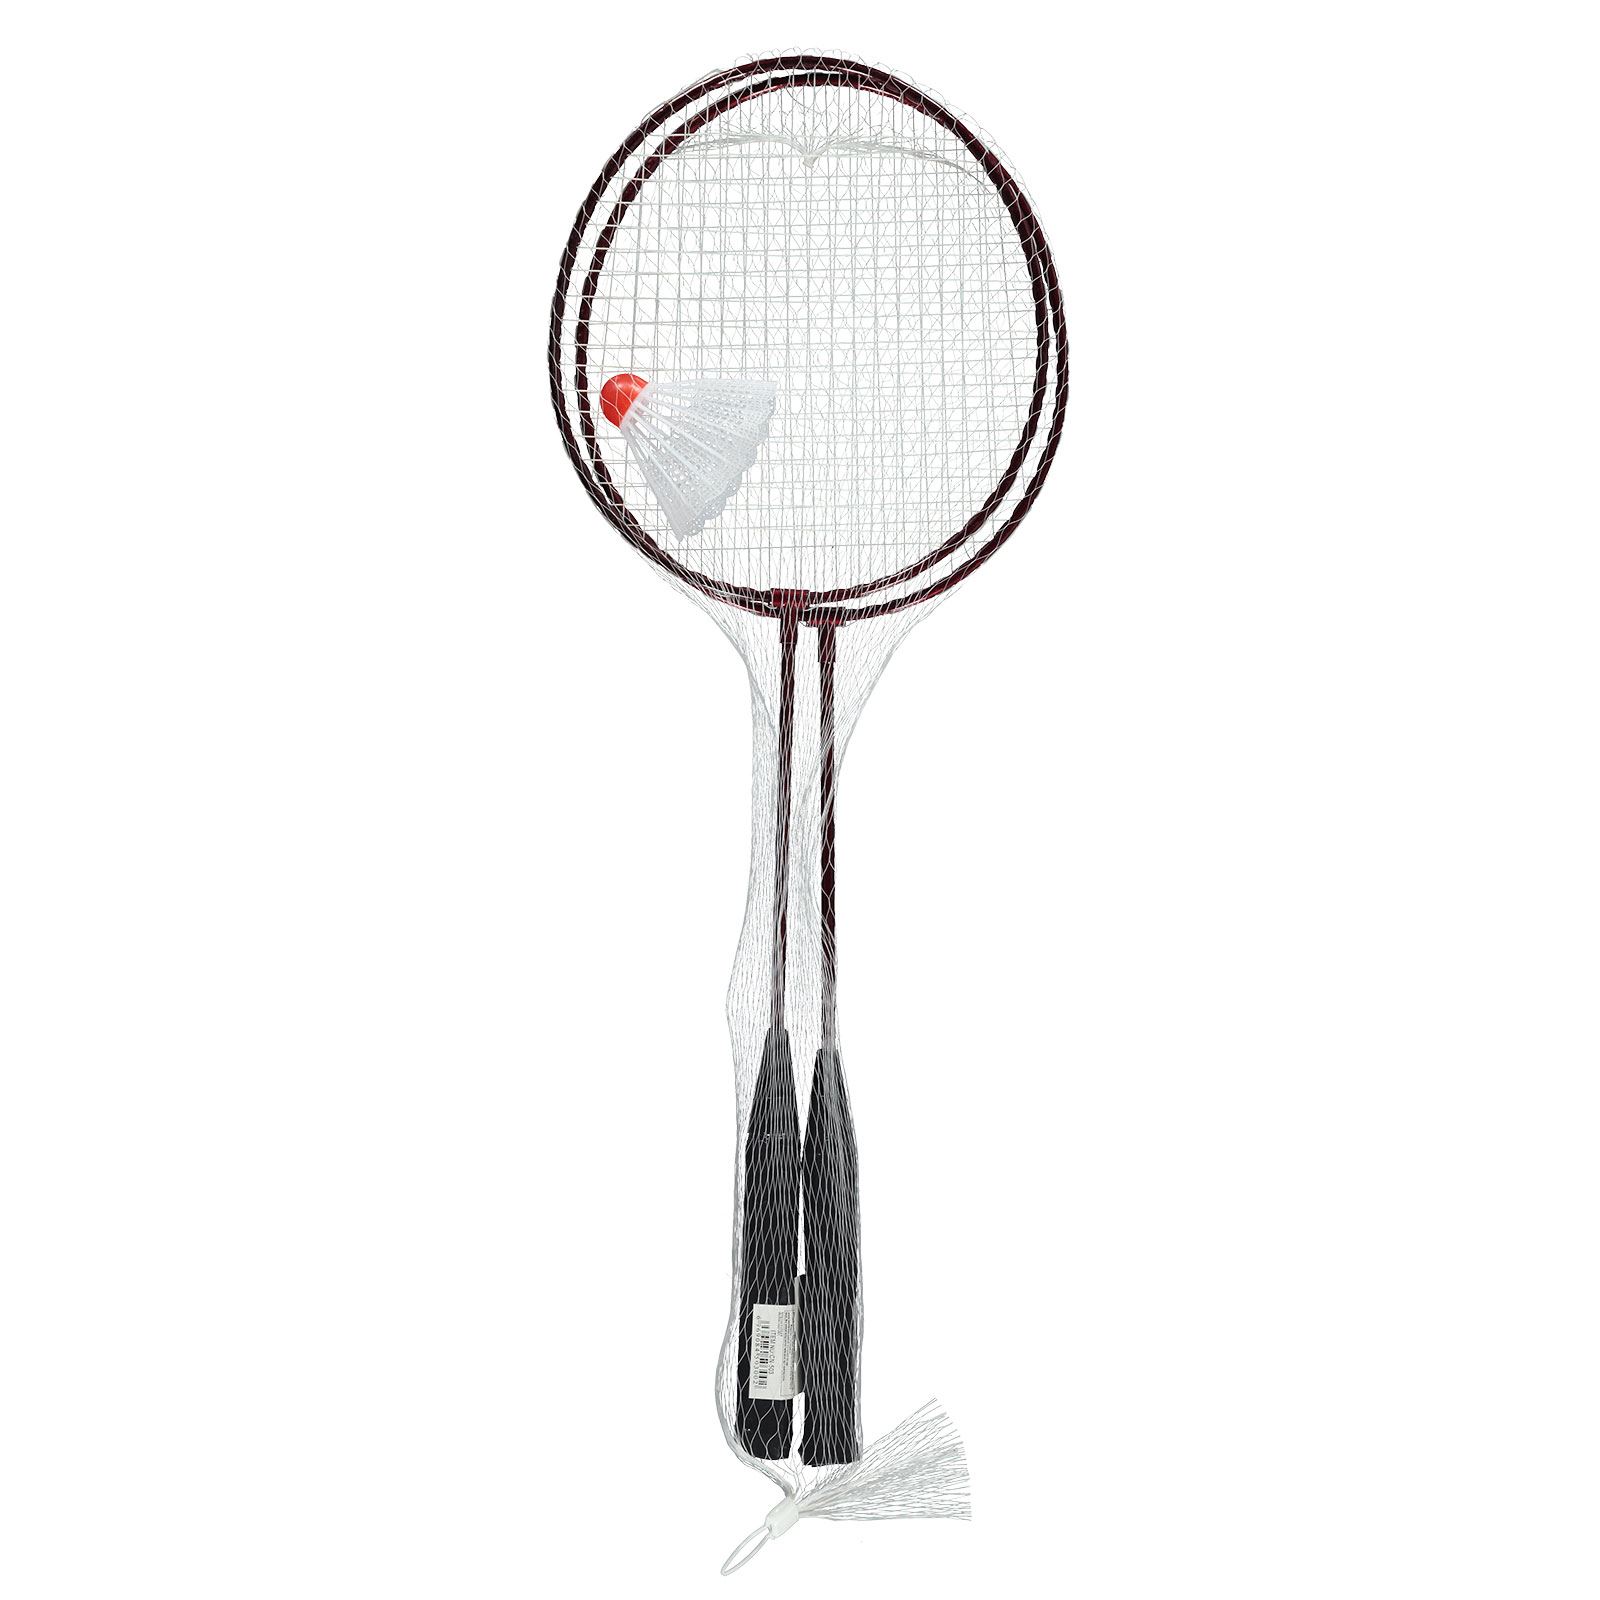 Can Oyuncak Fileli Badminton Siyah